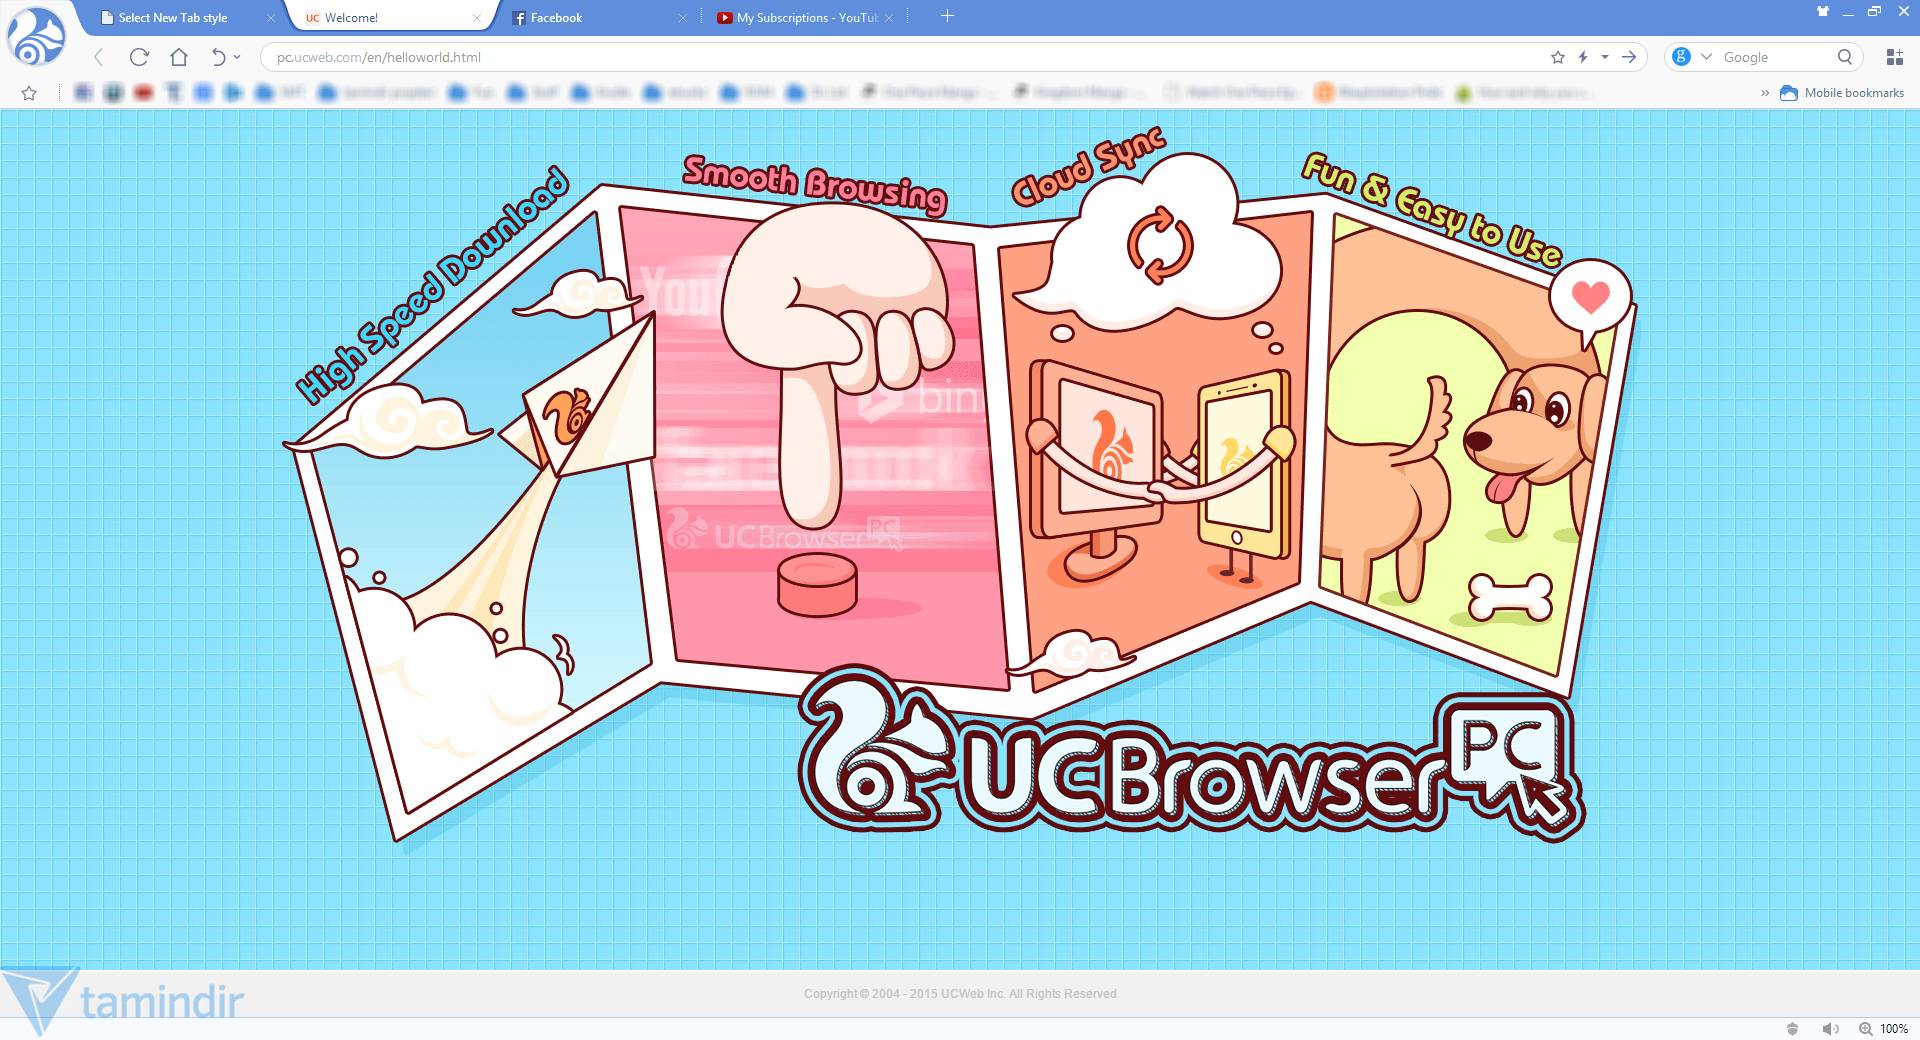 Muat turun UC Browser